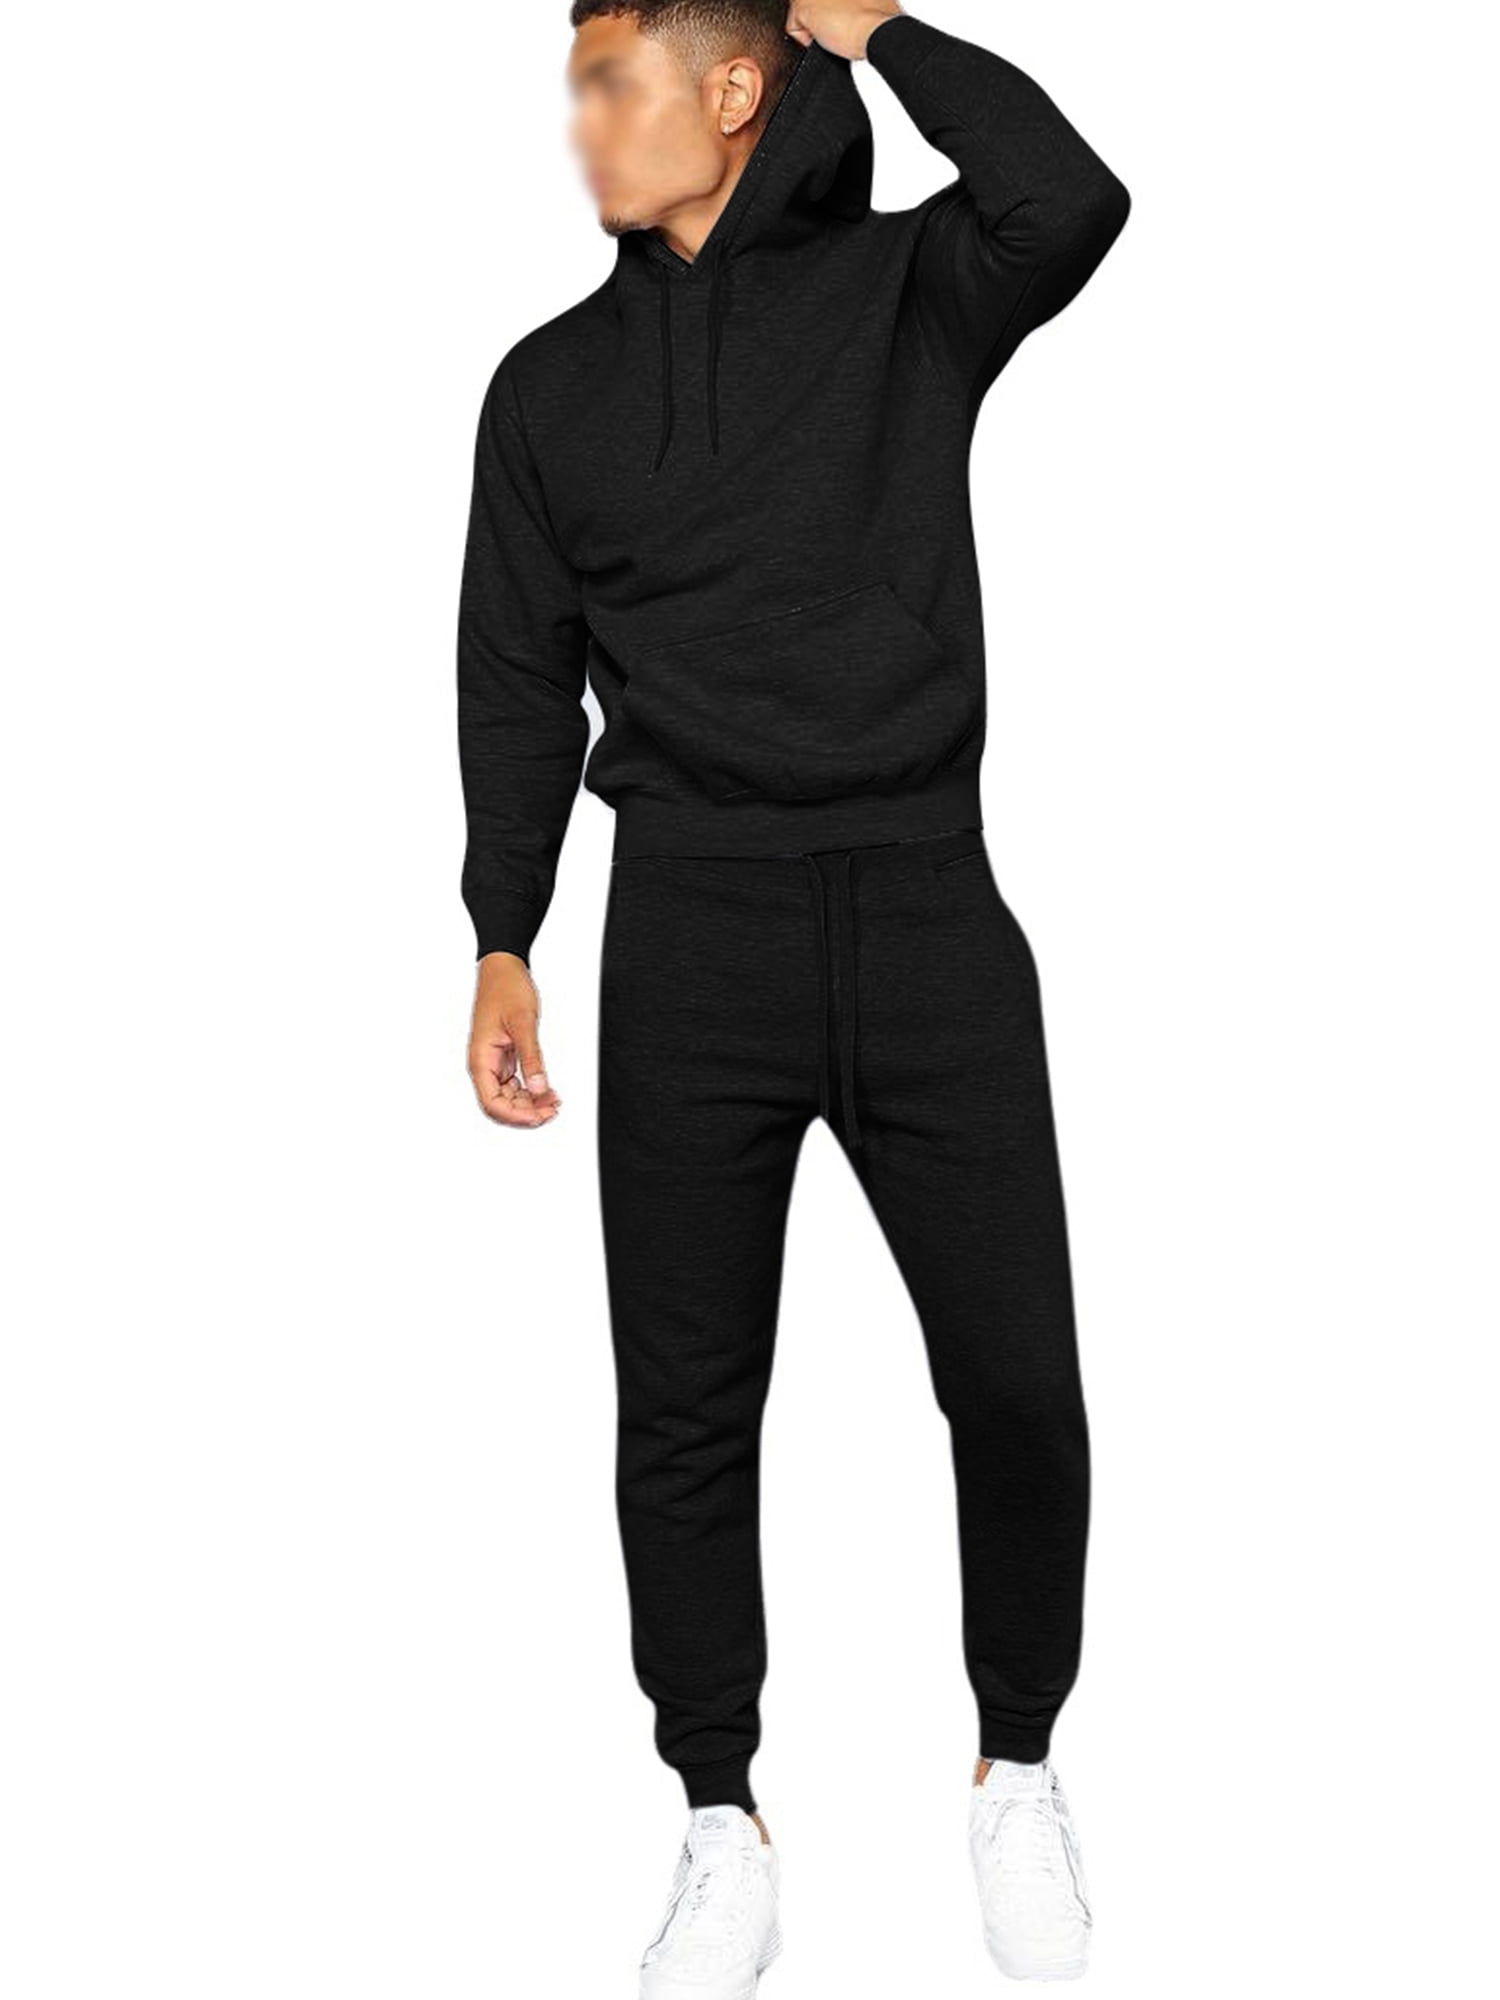 Capreze Men Sweatpants Tracksuit Set Casual 2 Pcs Sweatshirts+Pant Outfits  Gym Loungewear Hooded Hoodies Sweatsuit Black 2XL 